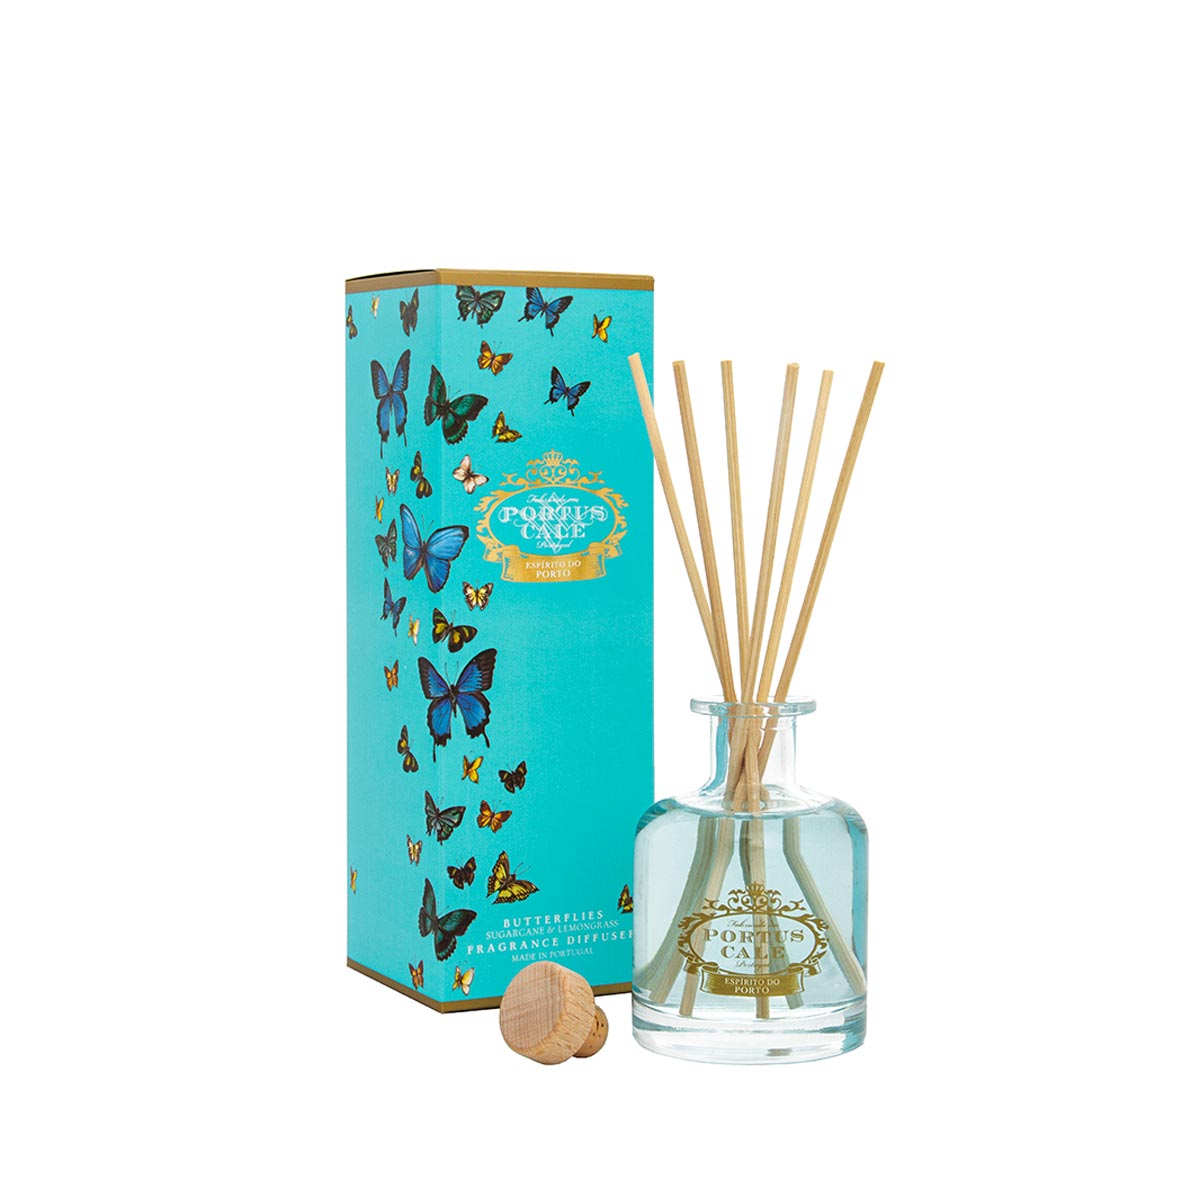 Castelbel Portus Cale Butterflies Fragrance Diffuser - 100Ml